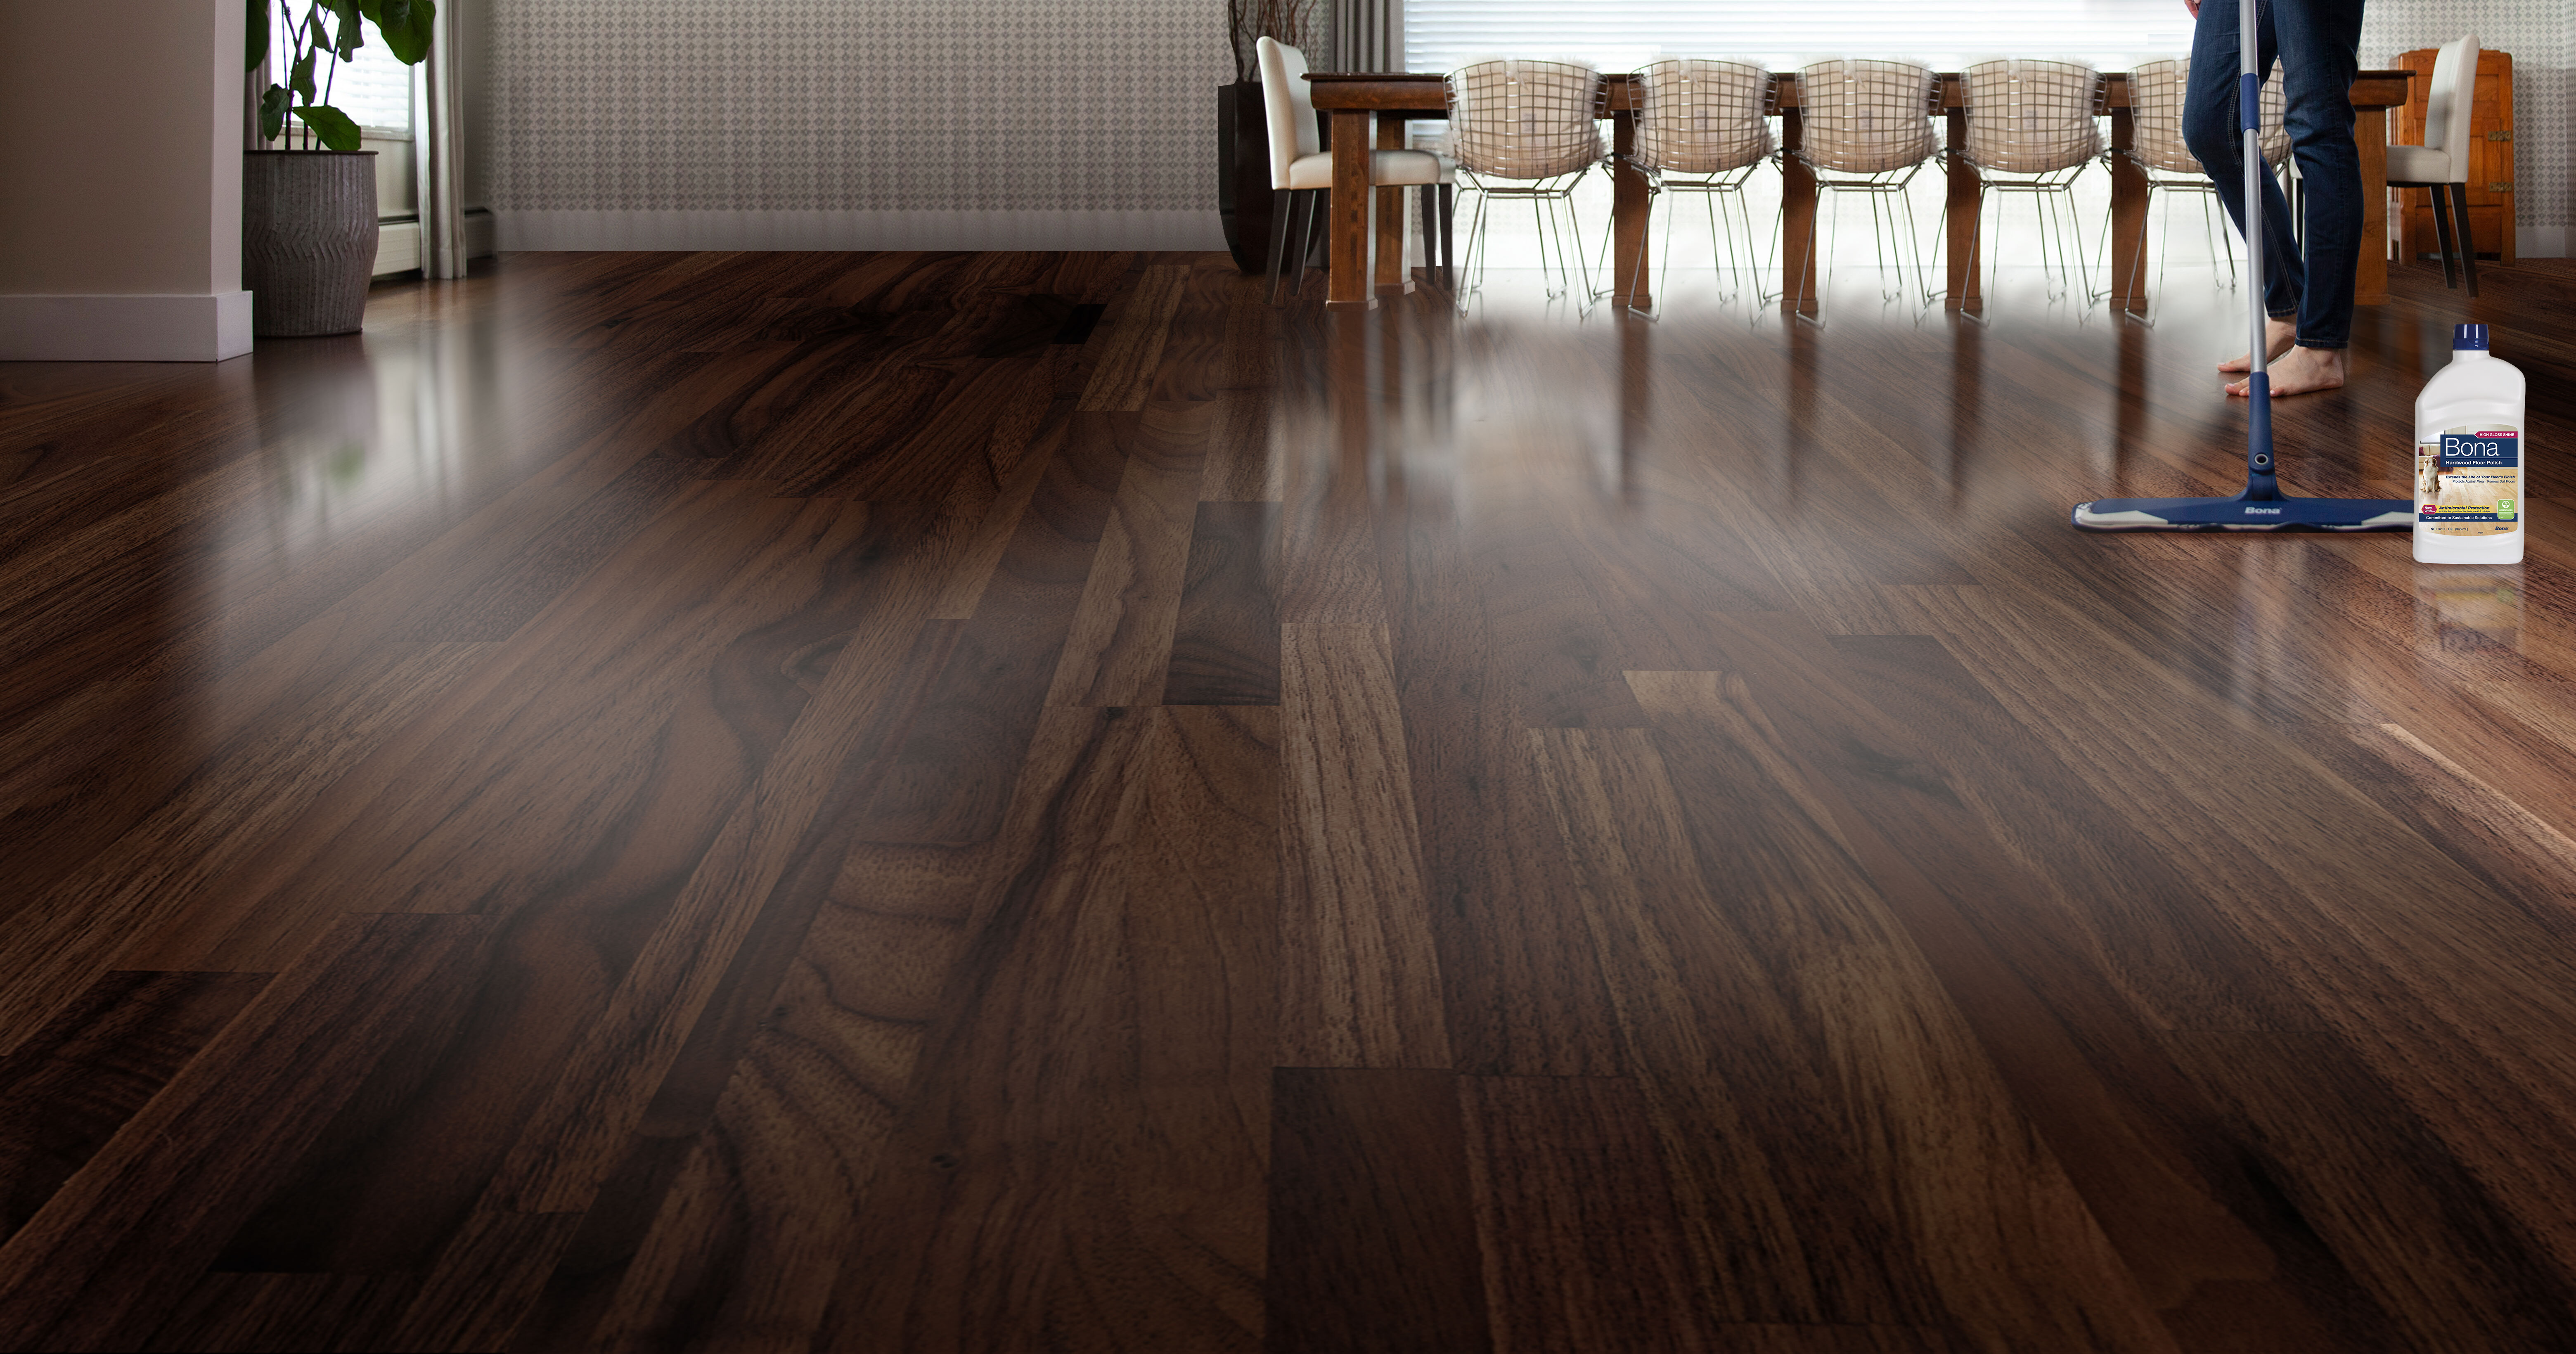 How To Polish Hardwood Floors Do S And, How To Make Dark Laminate Floors Shine